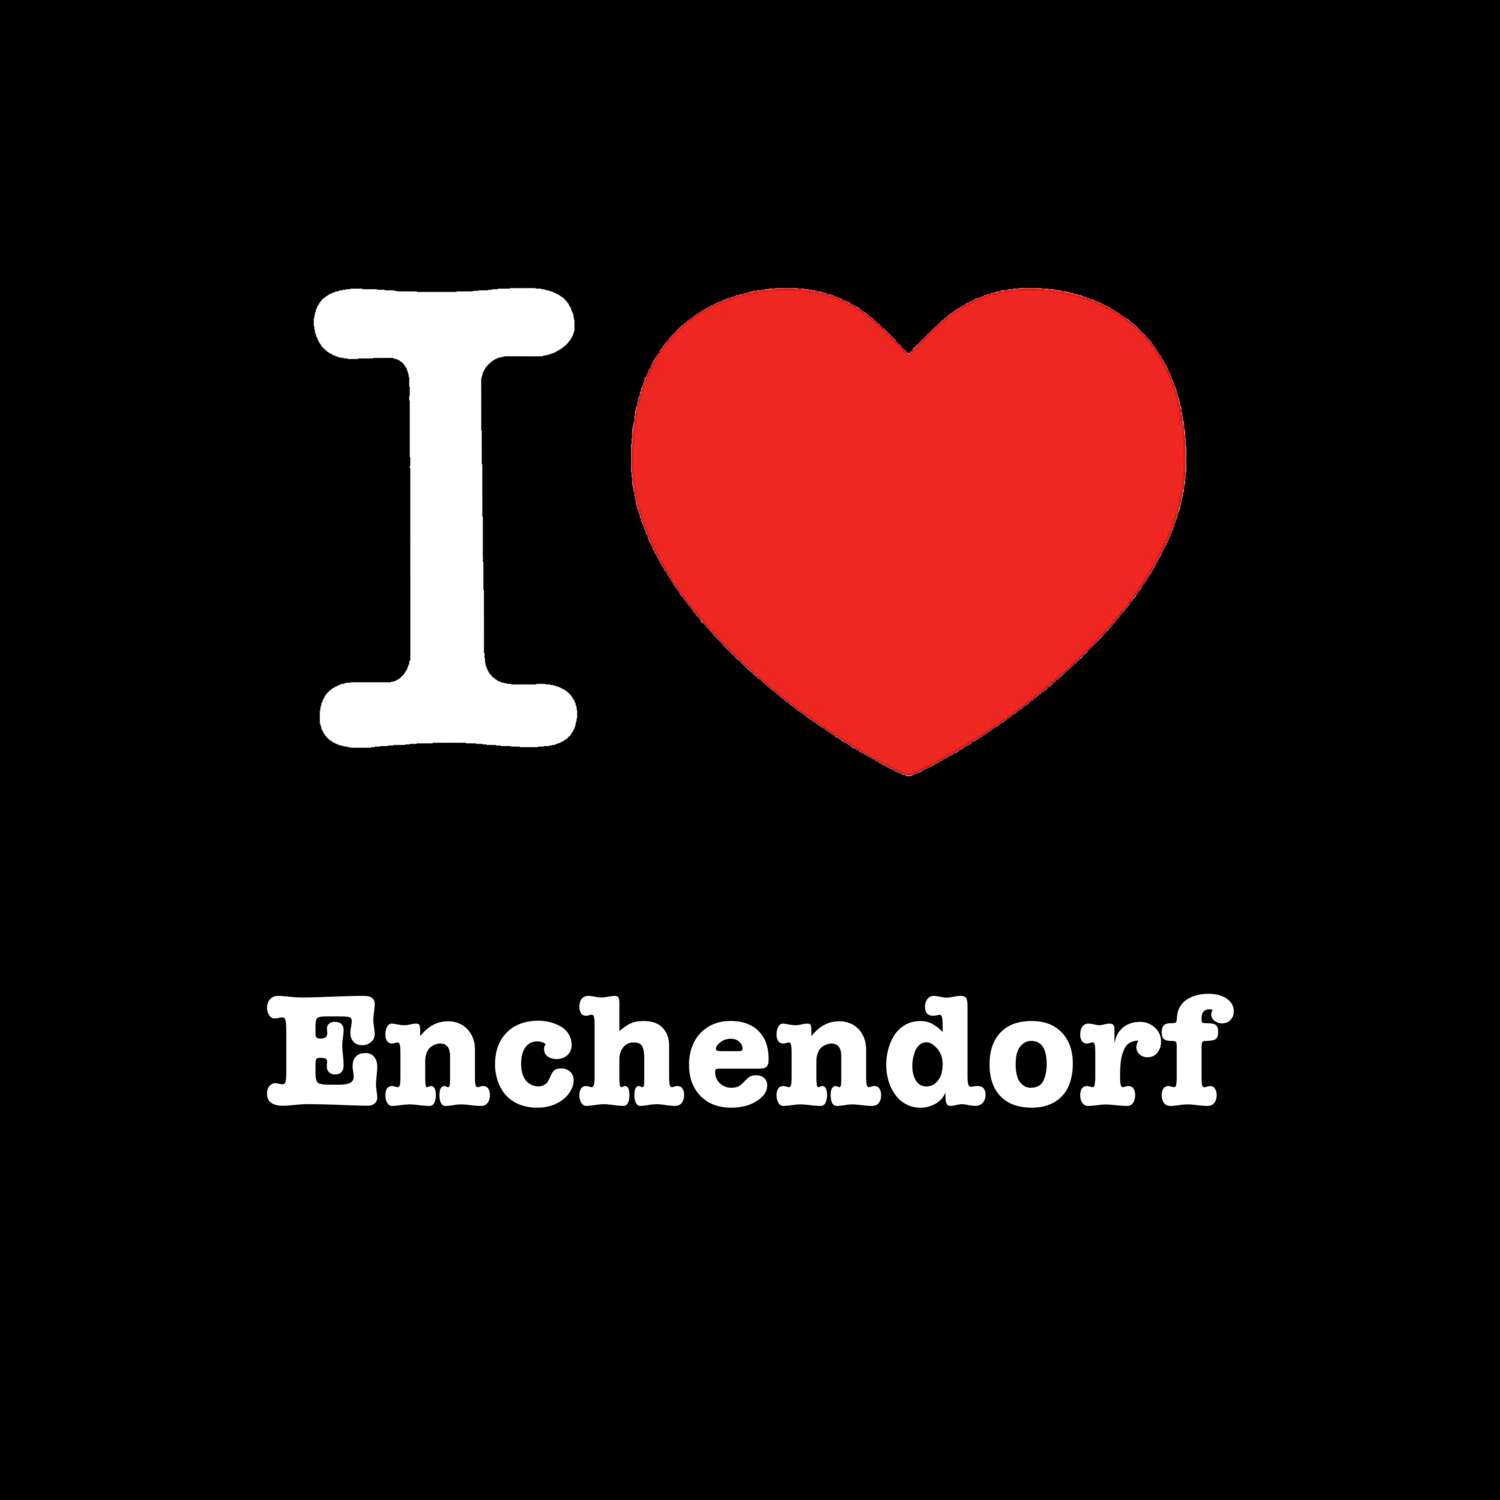 Enchendorf T-Shirt »I love«